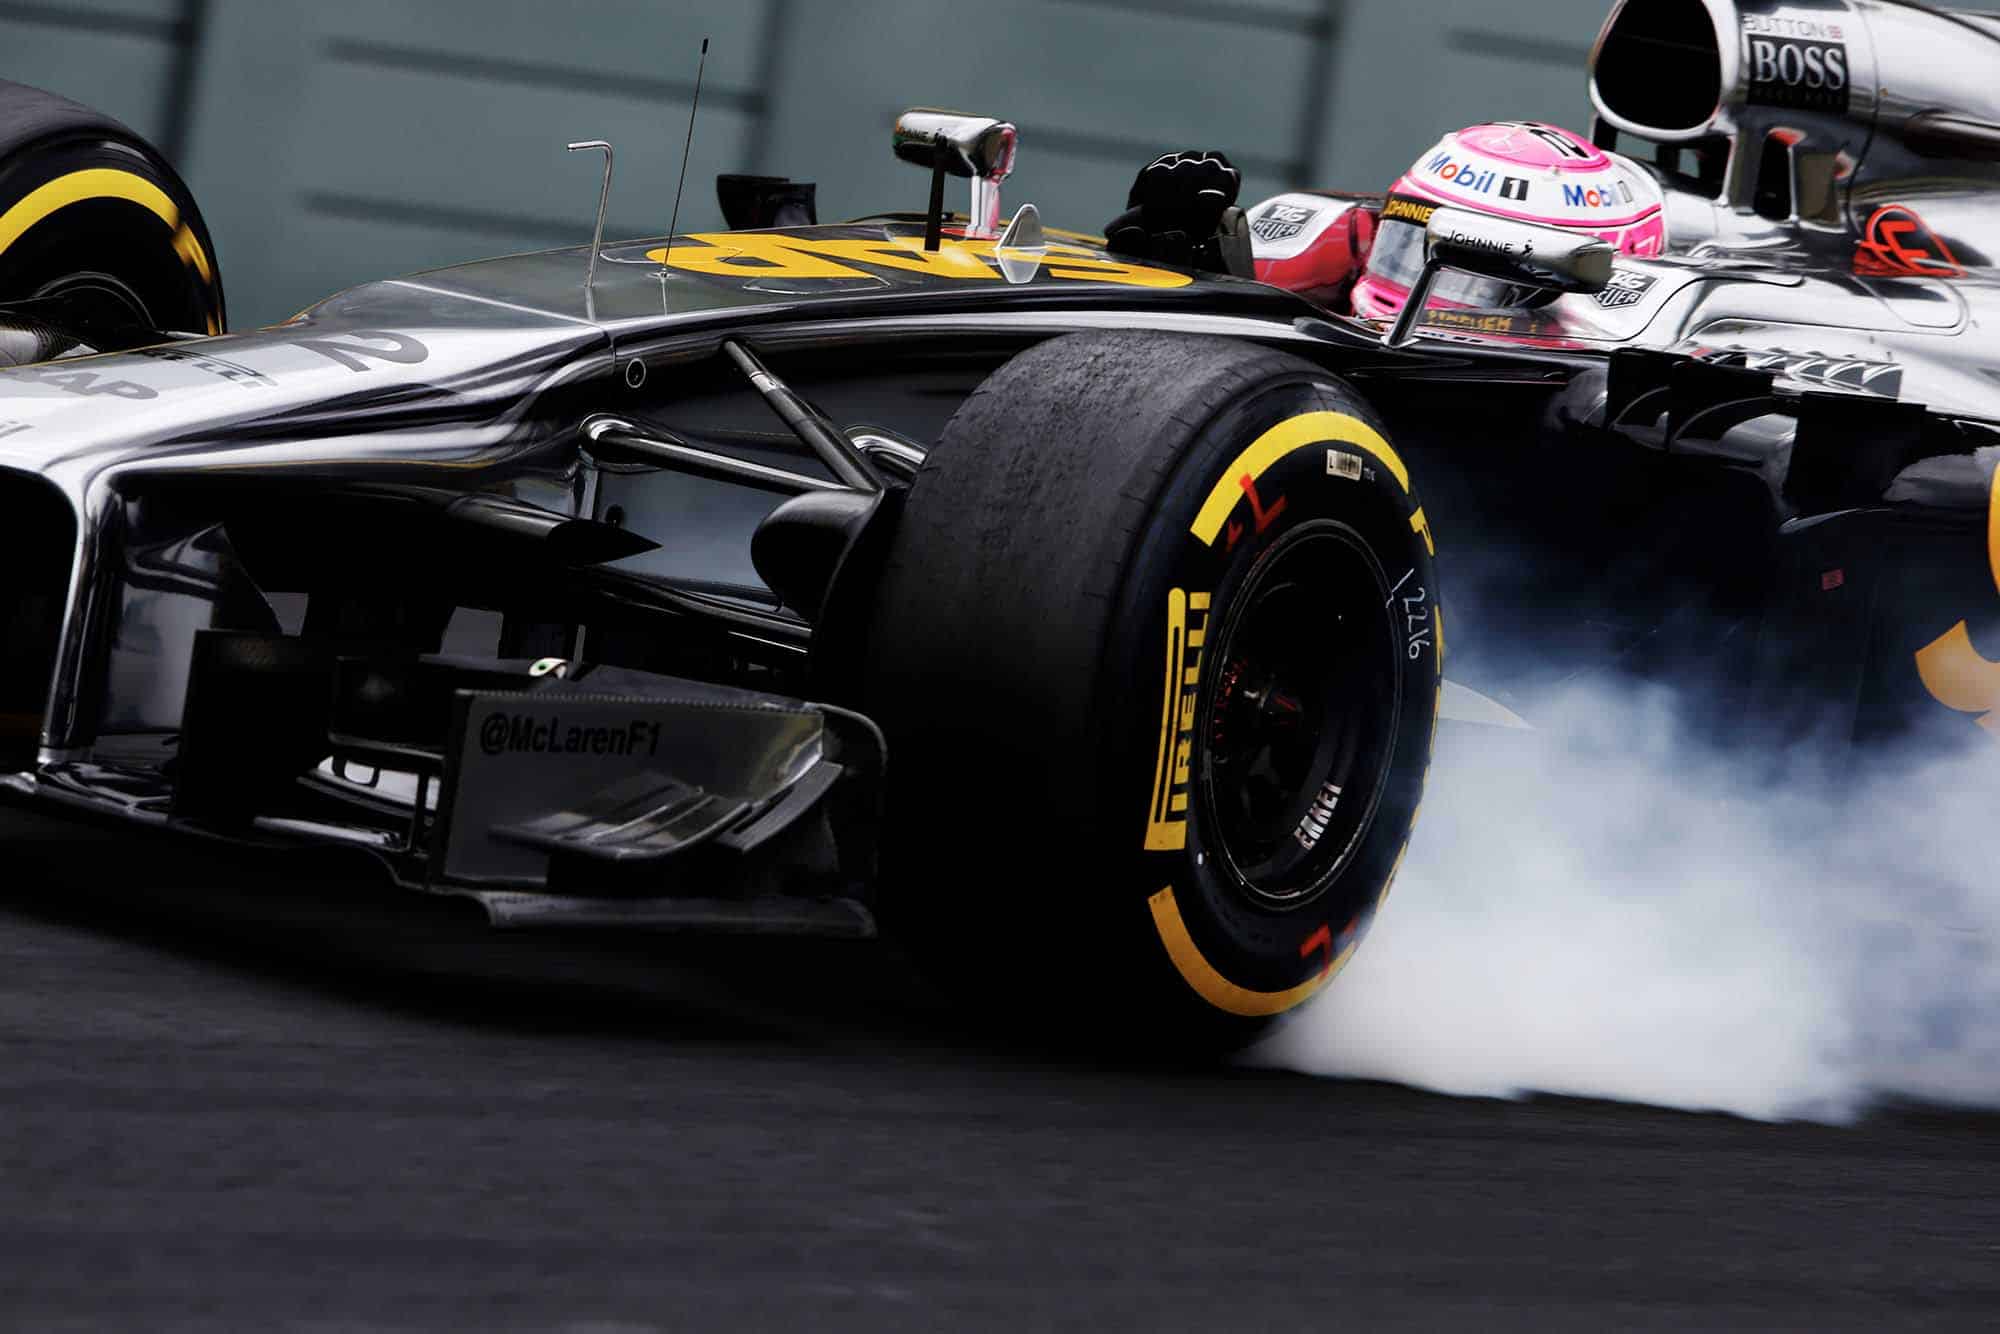 Jenson Button locks up his McLaren-Mercedes at 2014 Brazilian Grand Prix